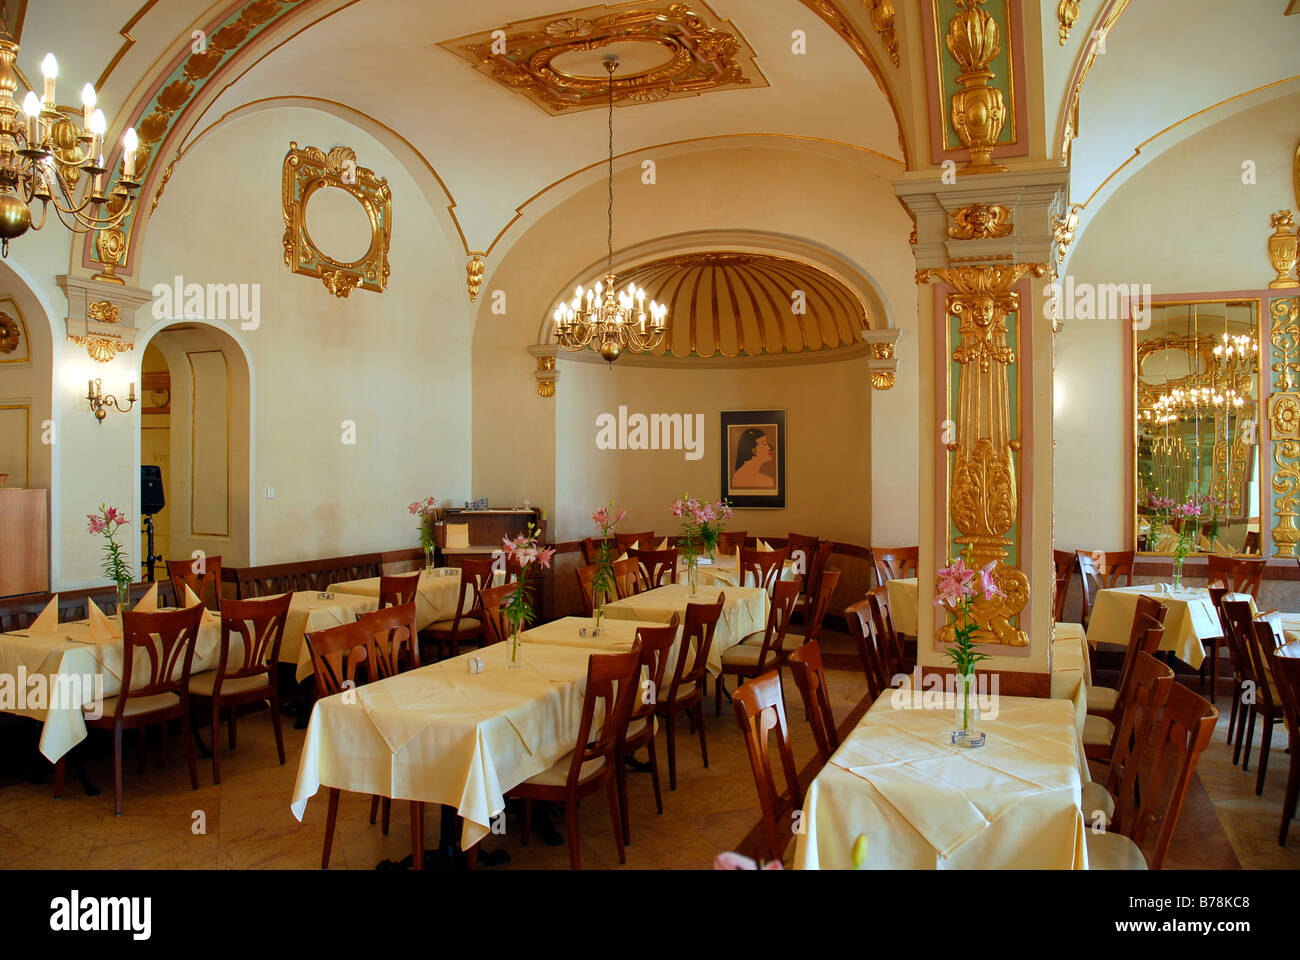 Keller Restaurant café bistro Orlando, interior decoration, gold and mirrors, Am Platzl Square, historic city centre, Munich, U Stock Photo